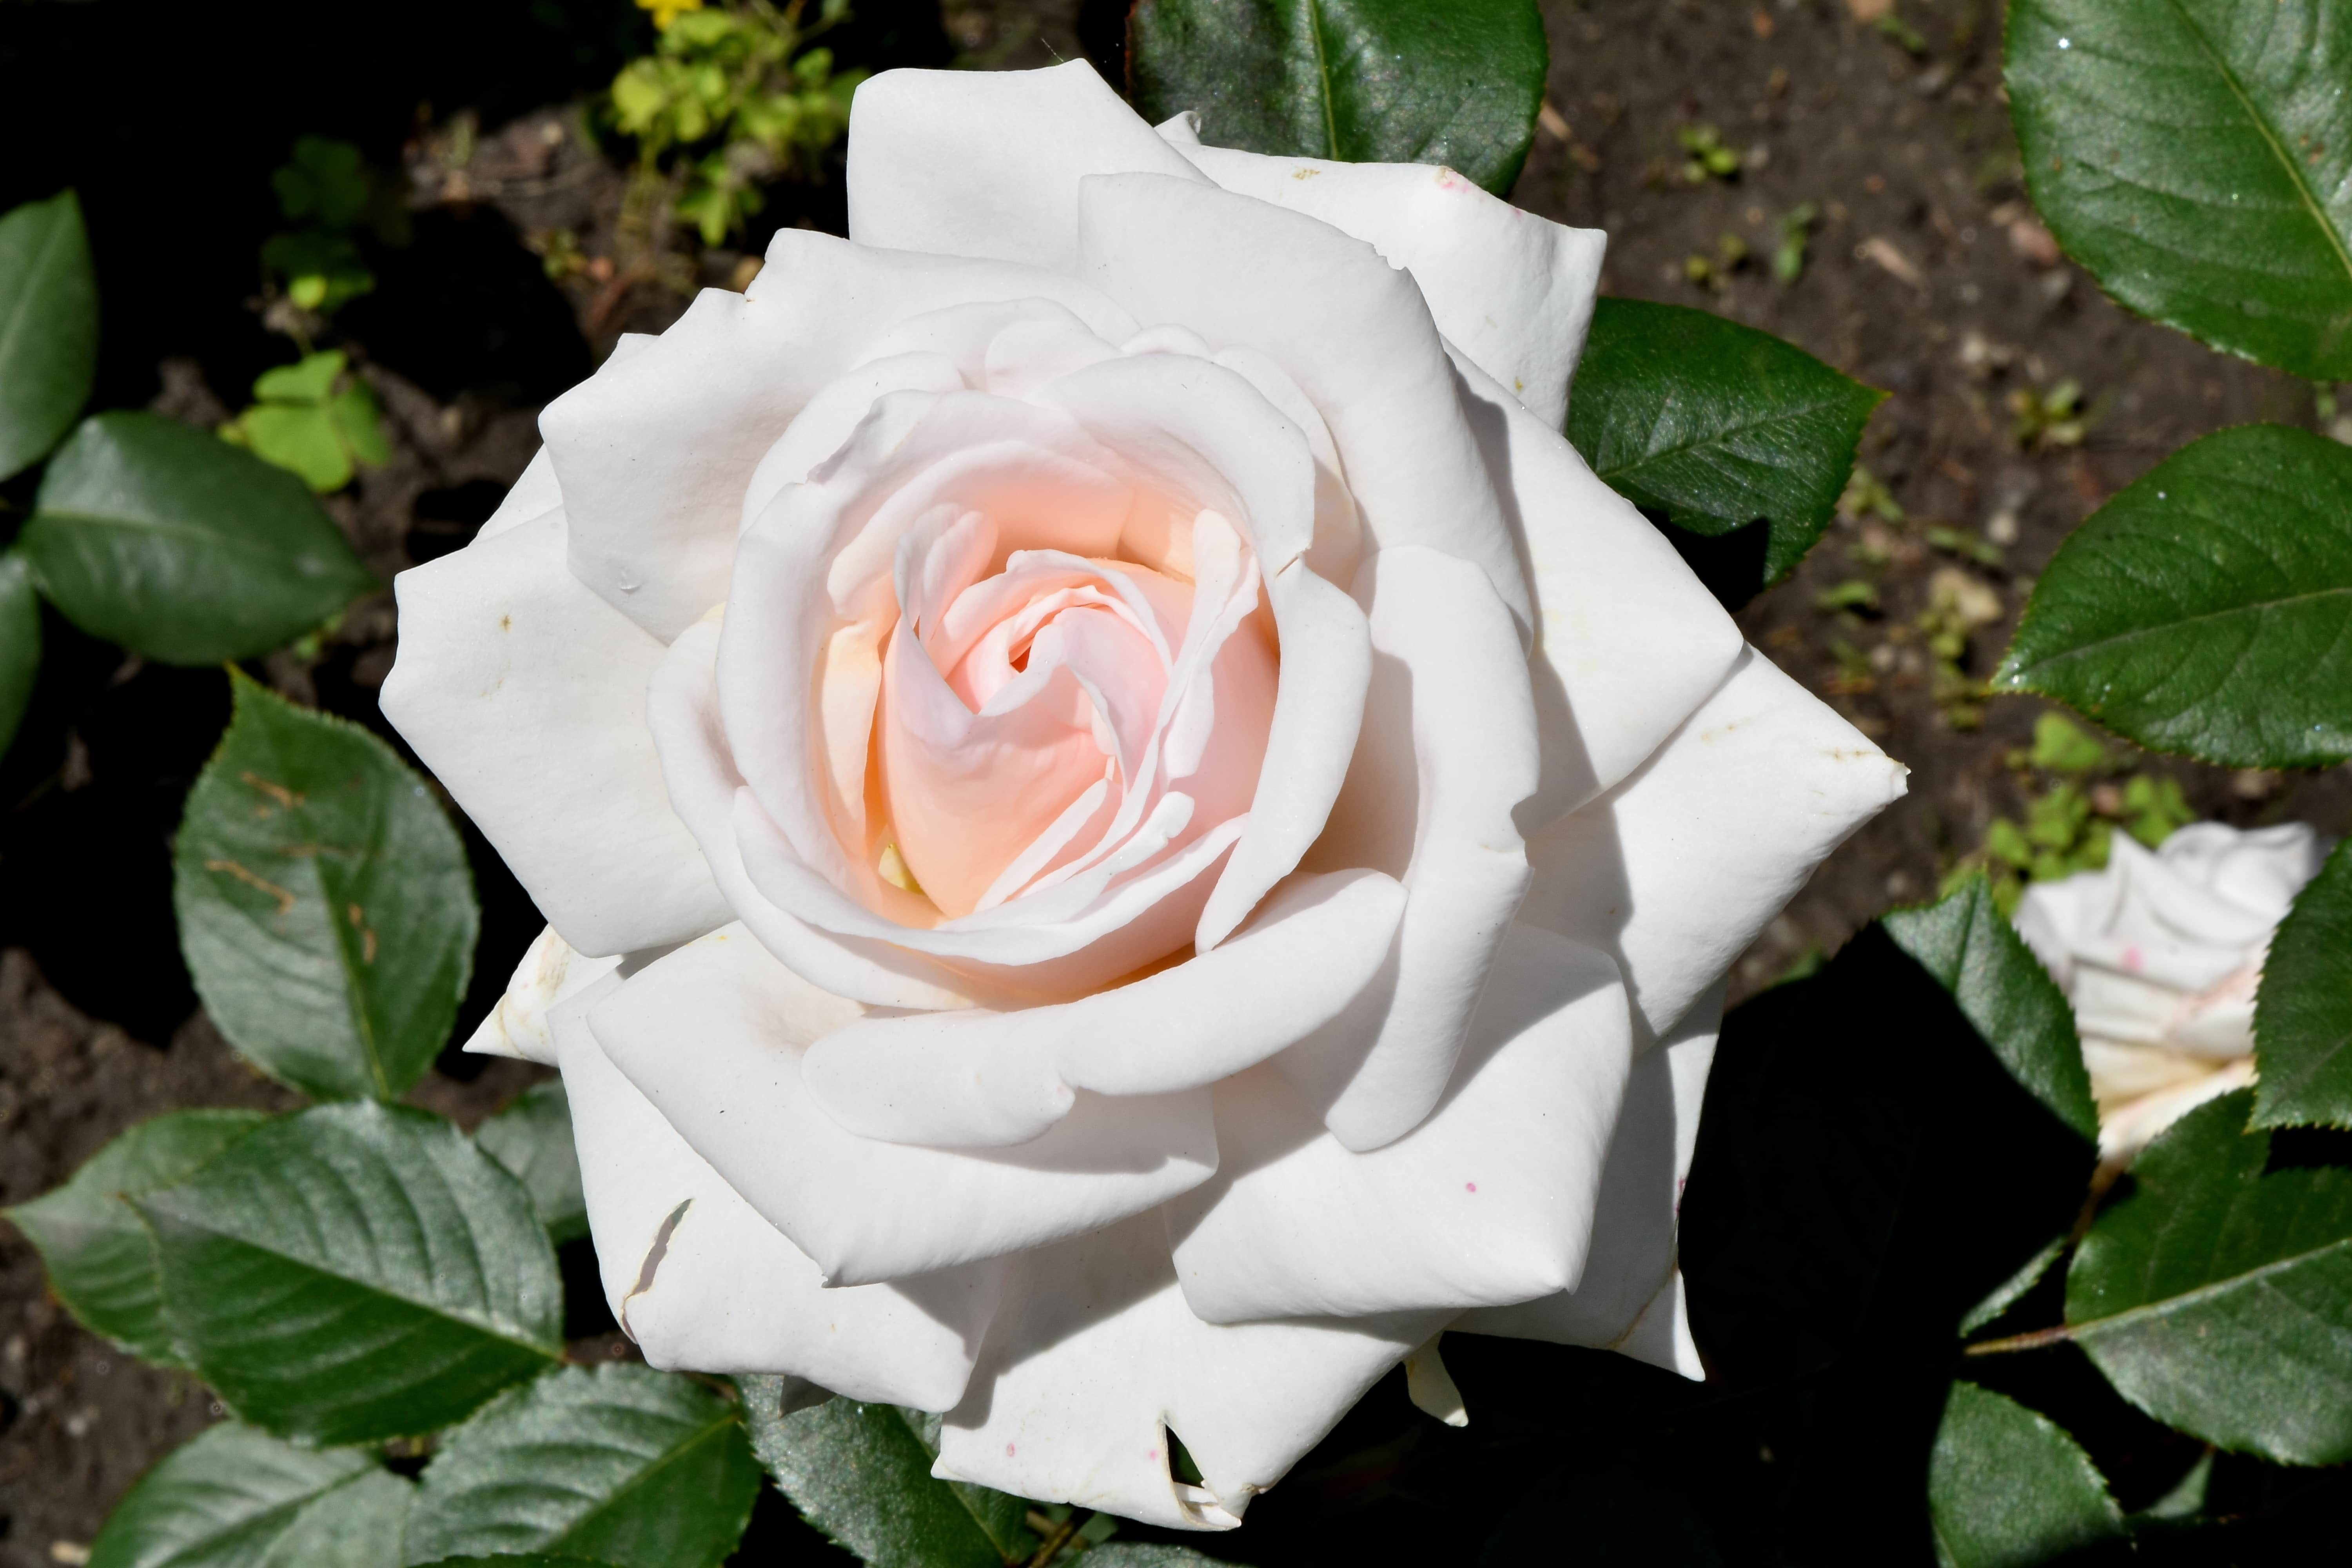 Image libre: jardin fleuri, fleur blanche, Rose, fleur, romance, nature,  plante, arbuste, feuille, jardin